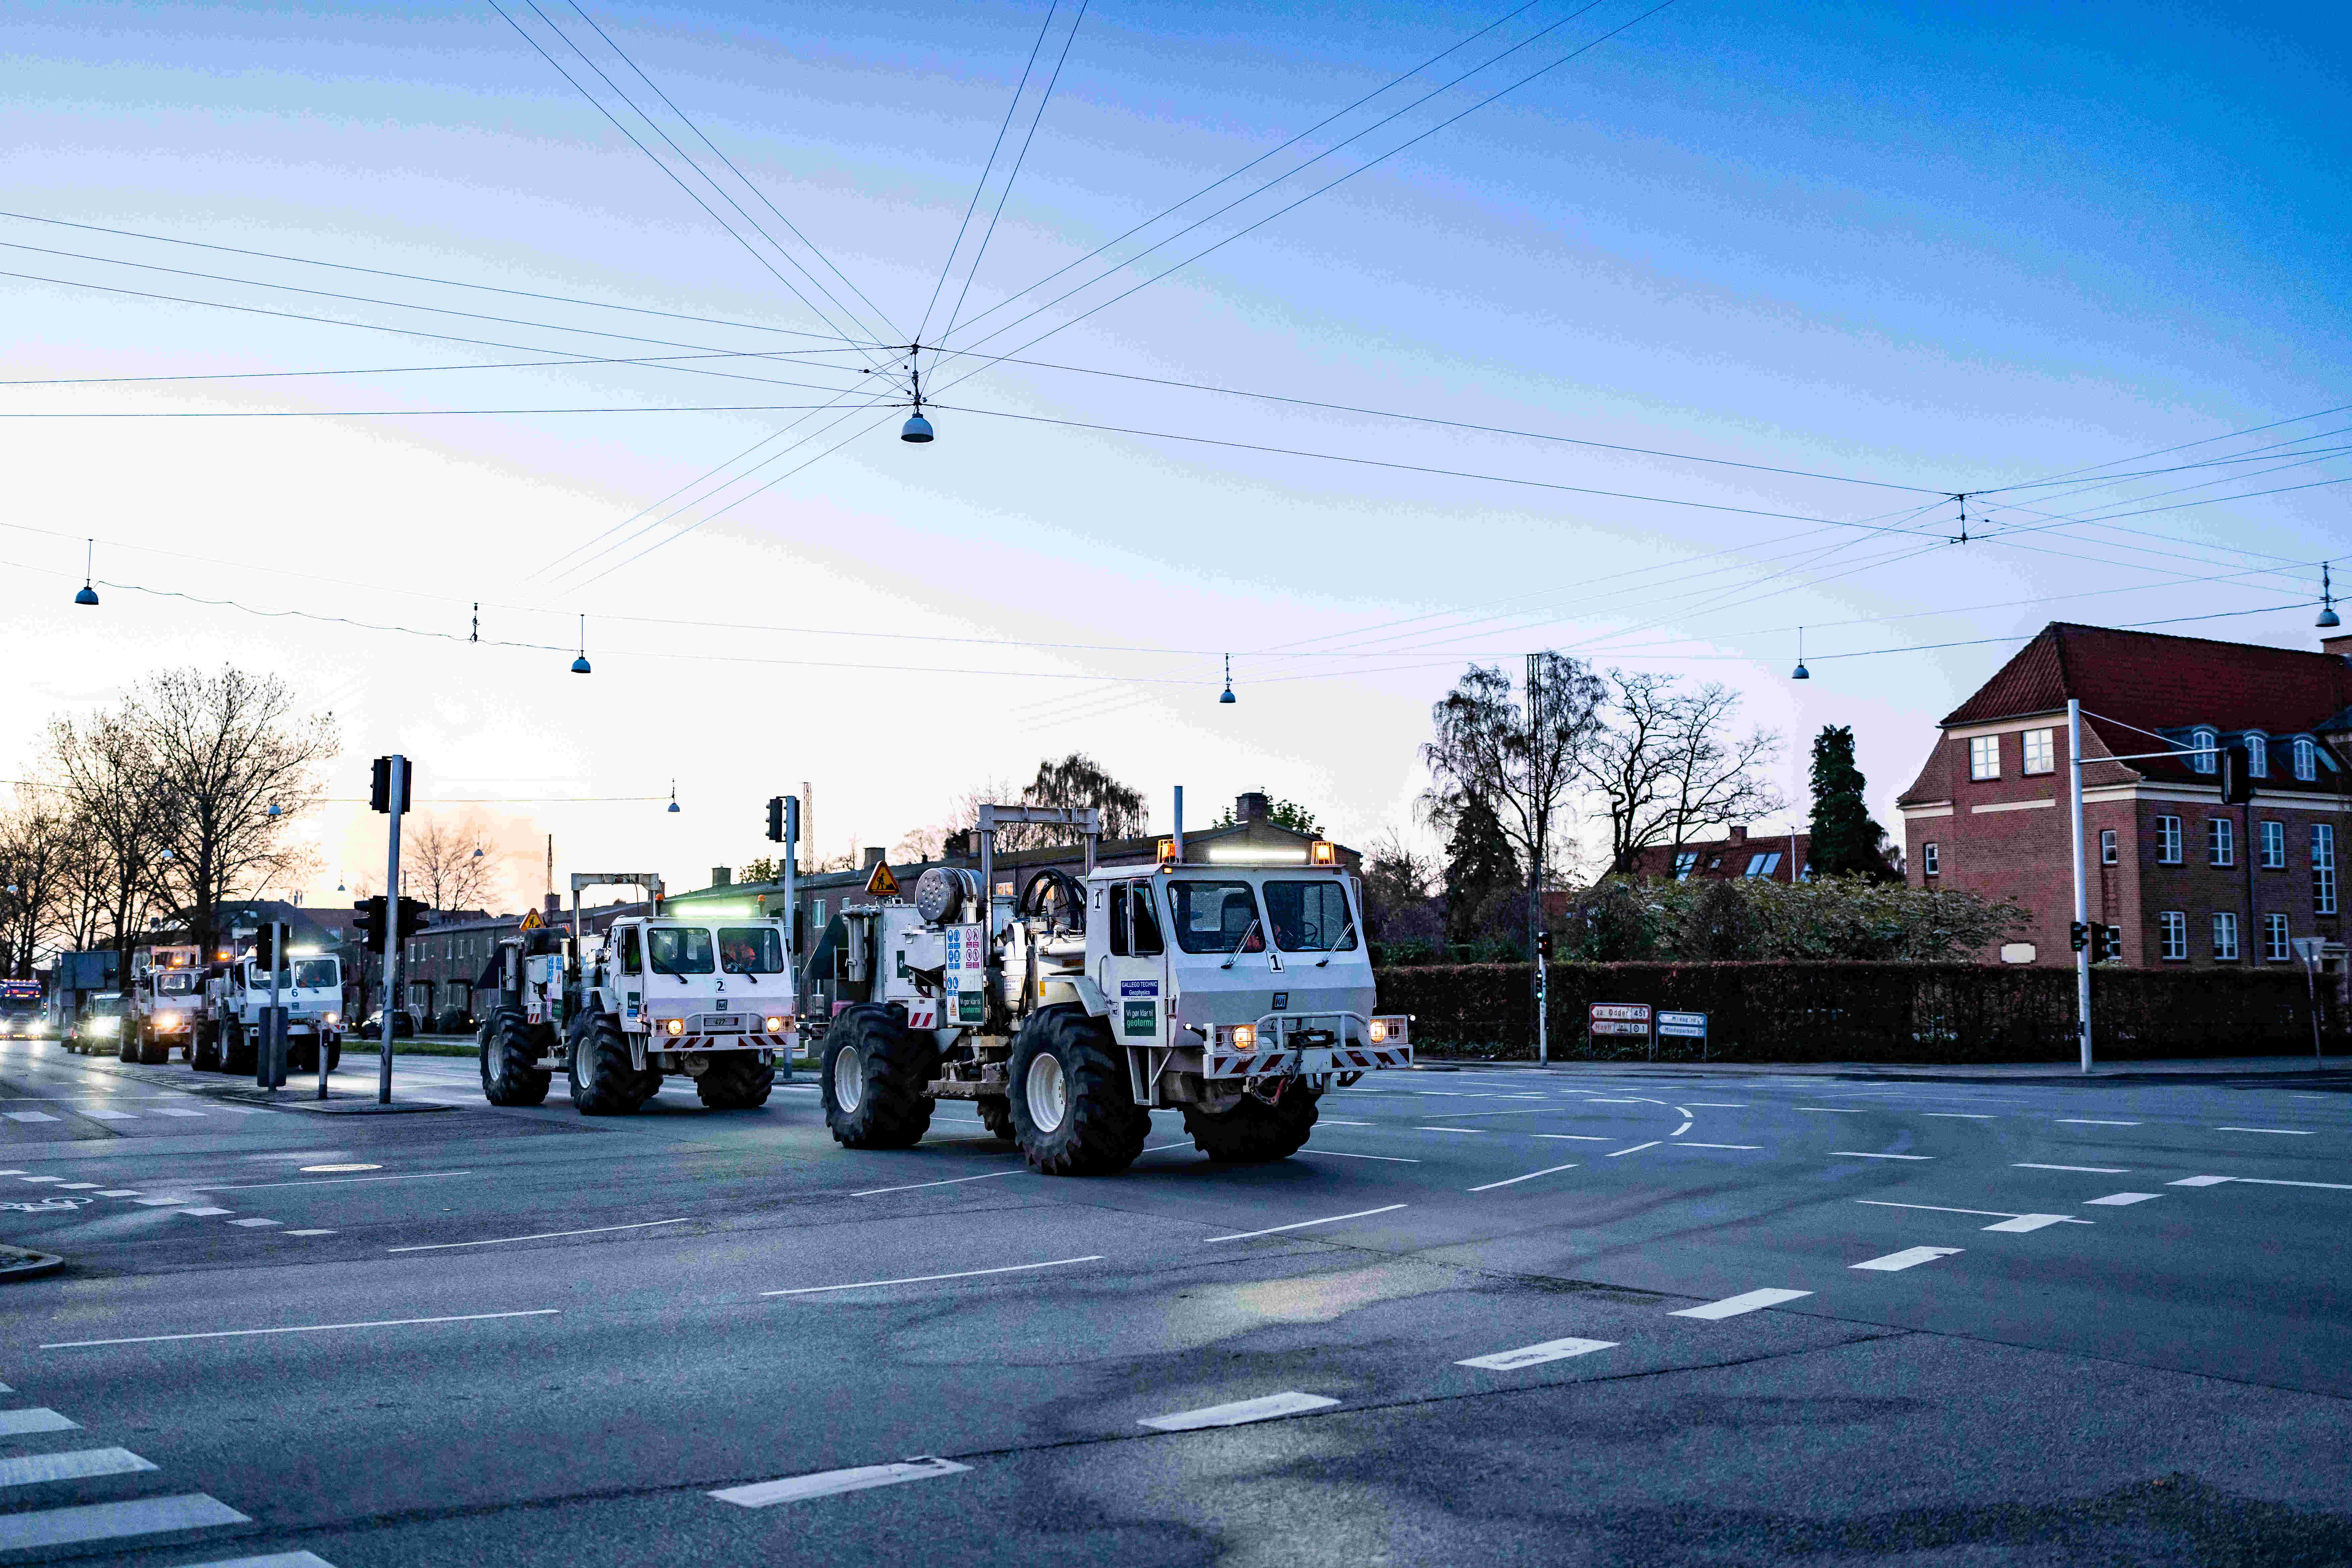 Seismic trucks in Aarhus, Denmark